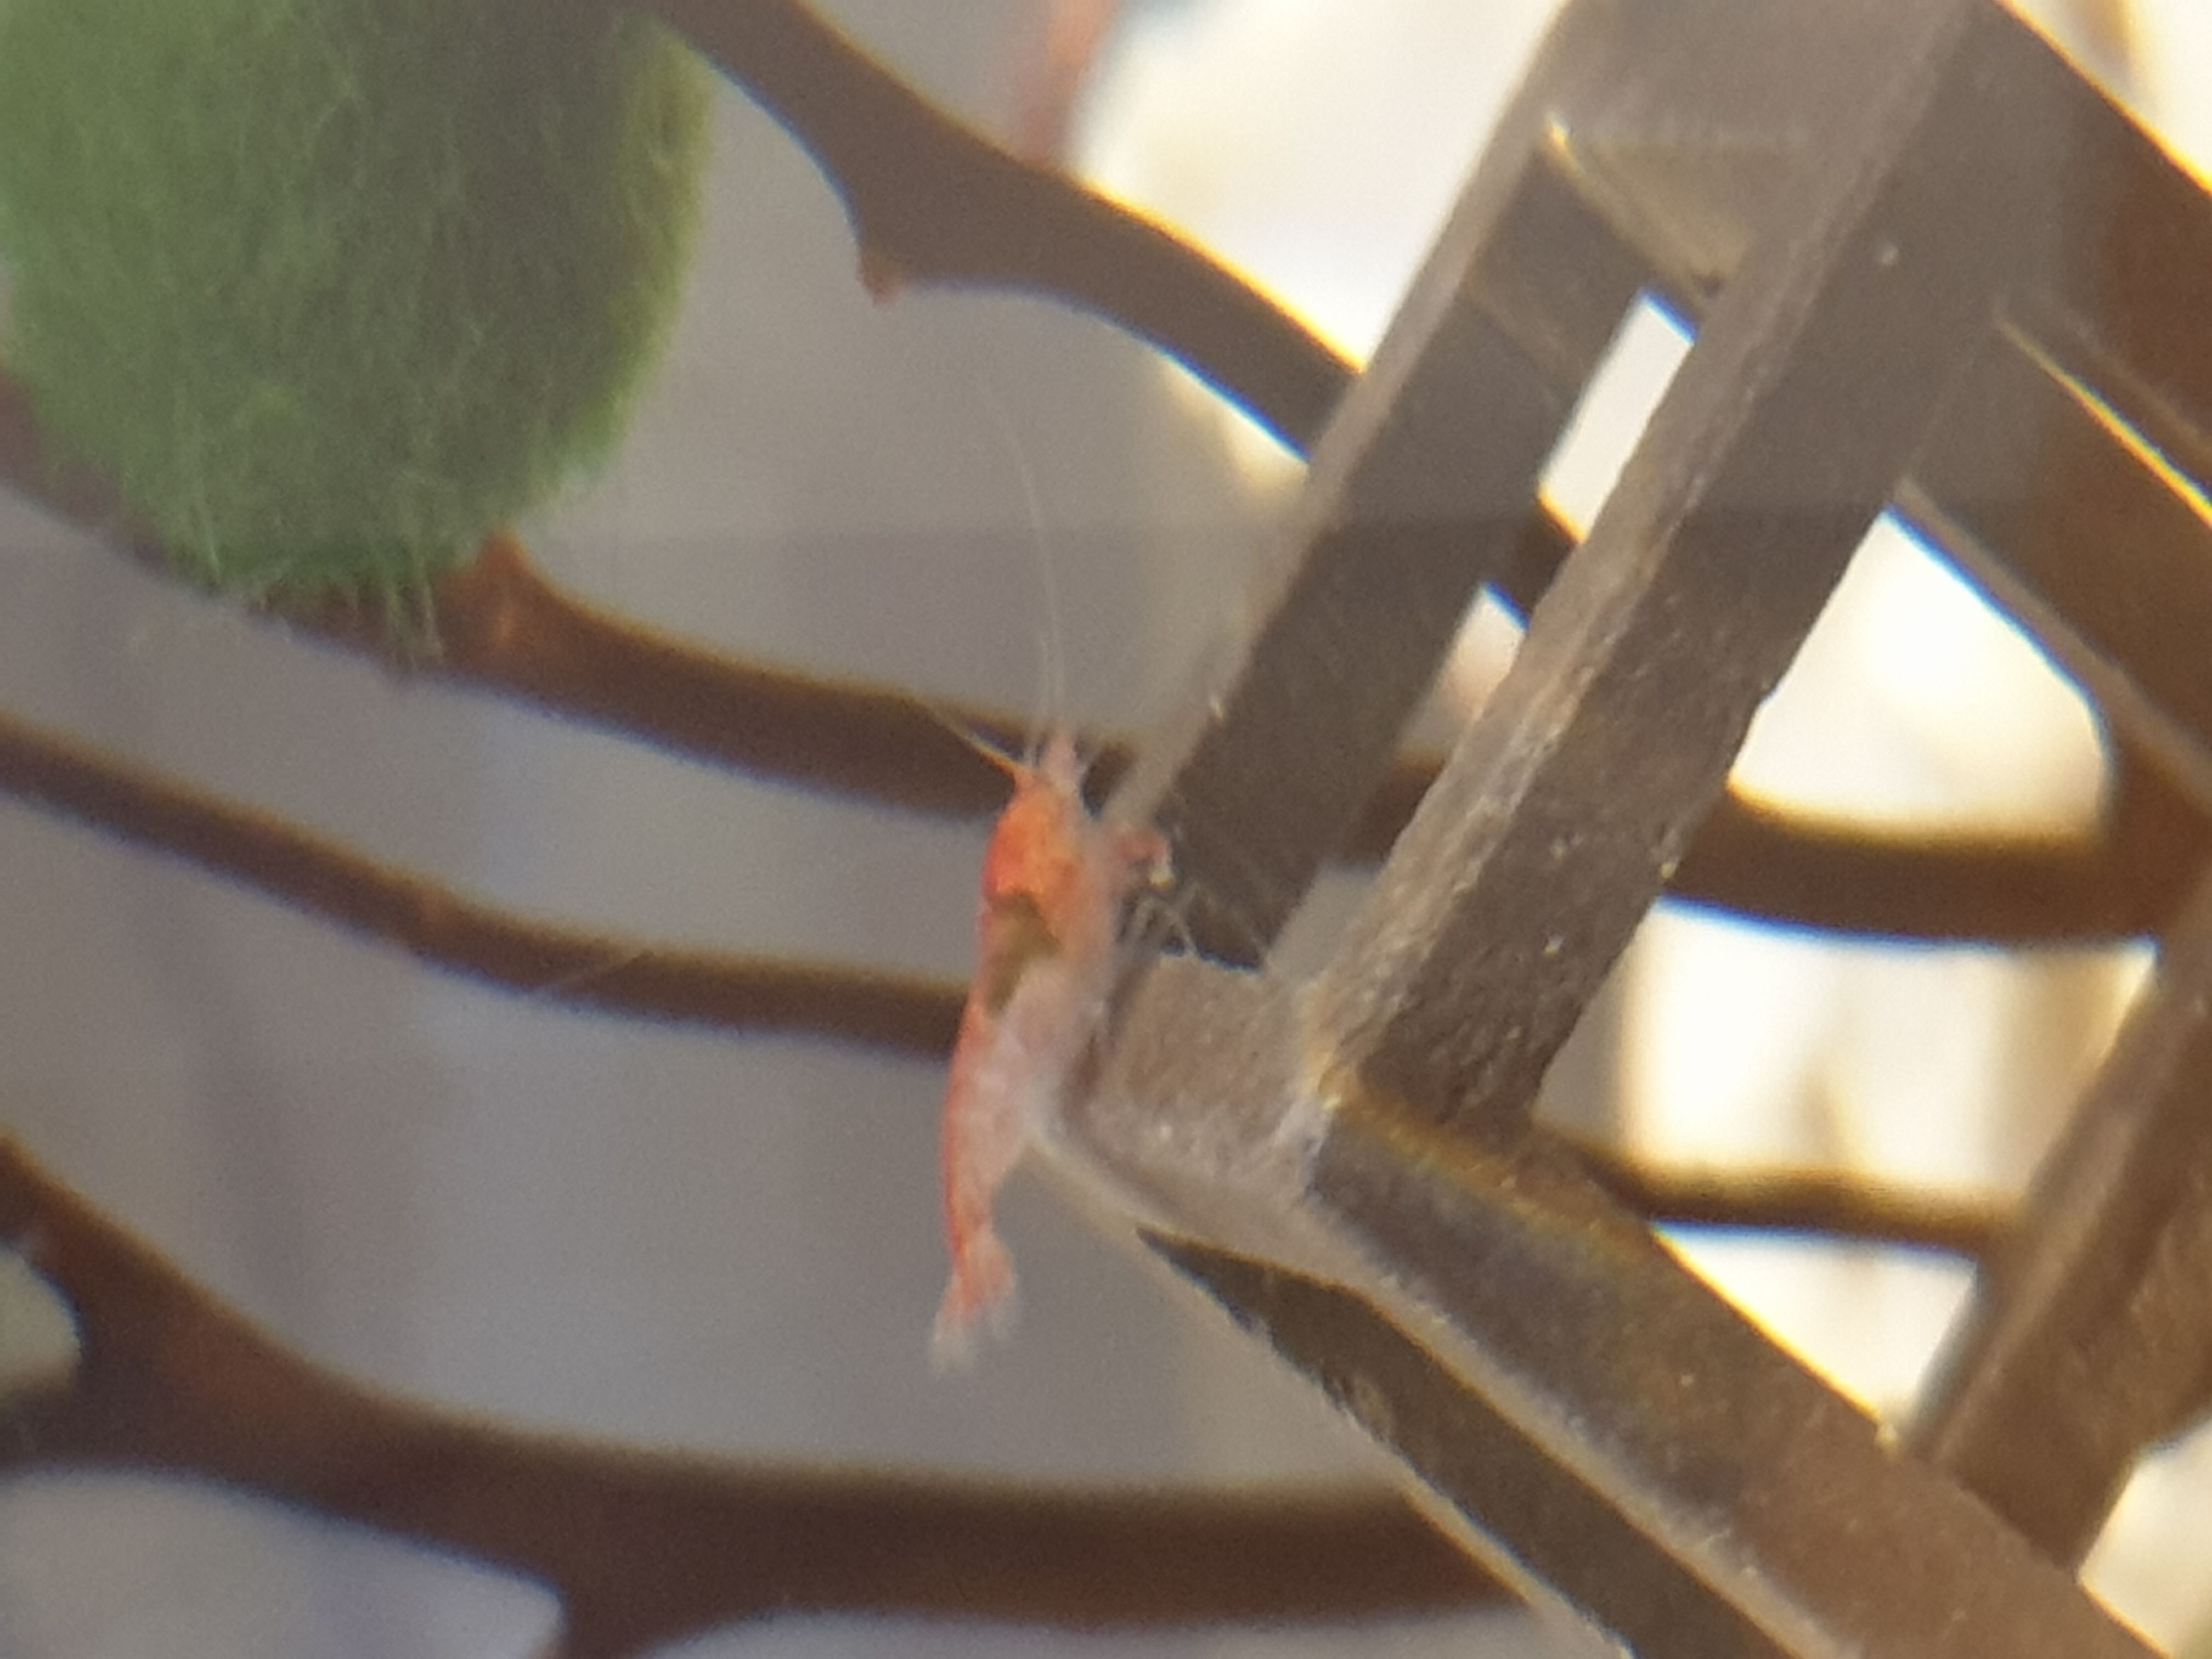 New preggie shrimp!